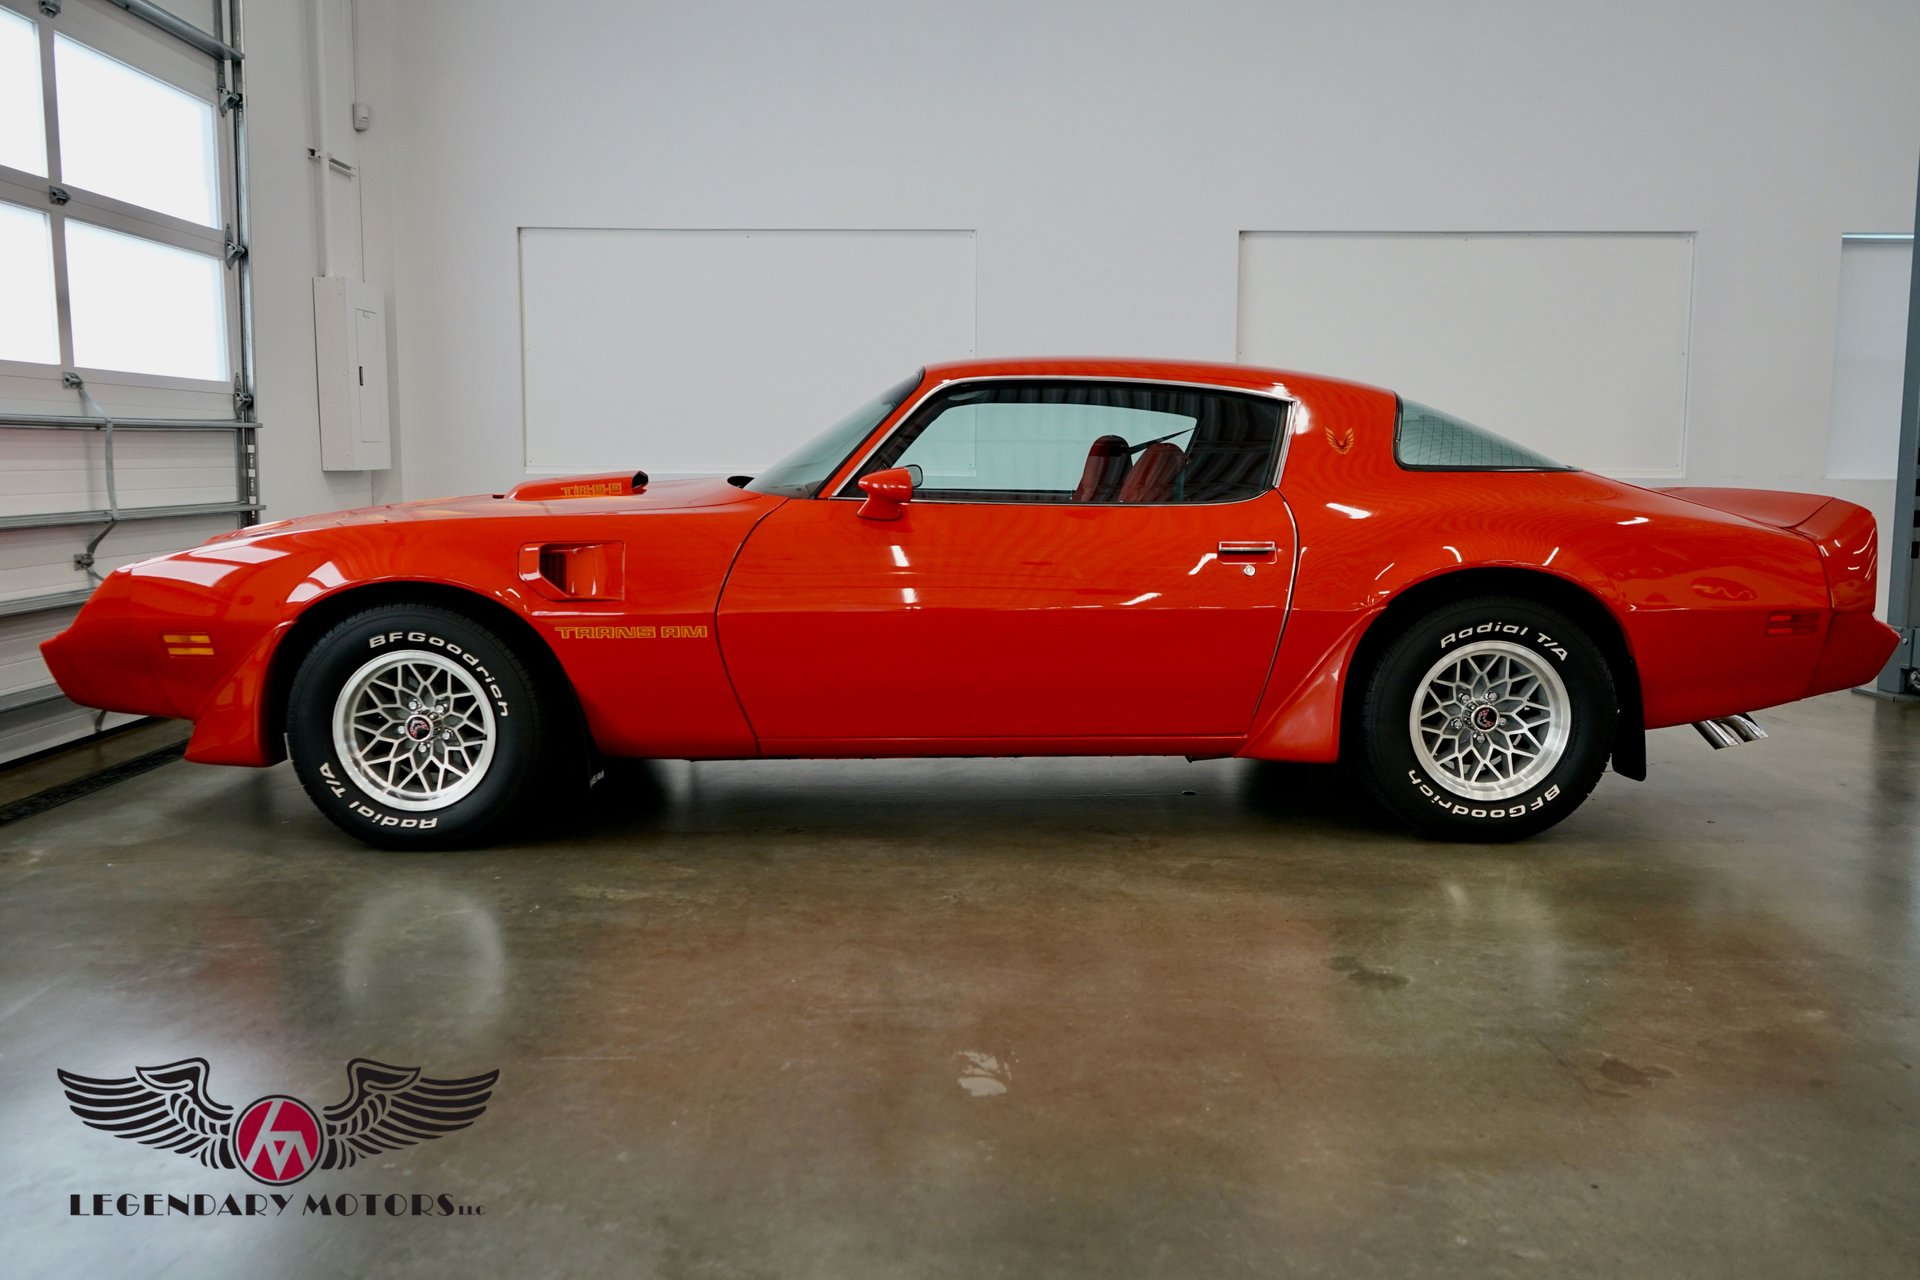 1979 Pontiac Firebird Trans Am | Legendary Motors - Classic Cars, Muscle  Cars, Hot Rods & Antique Cars - Rowley, MA